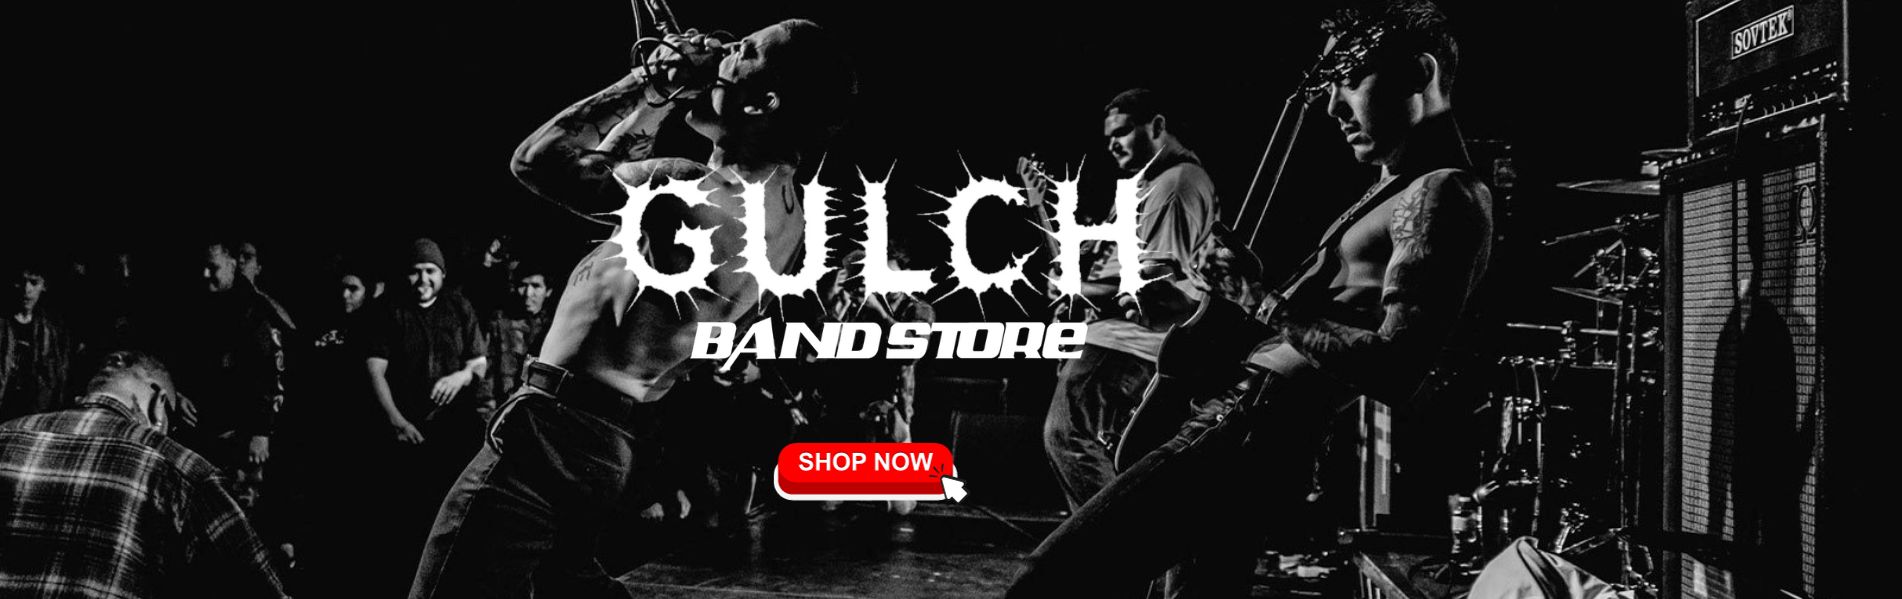 Gulch Band Store Banner - Gulch Band Store